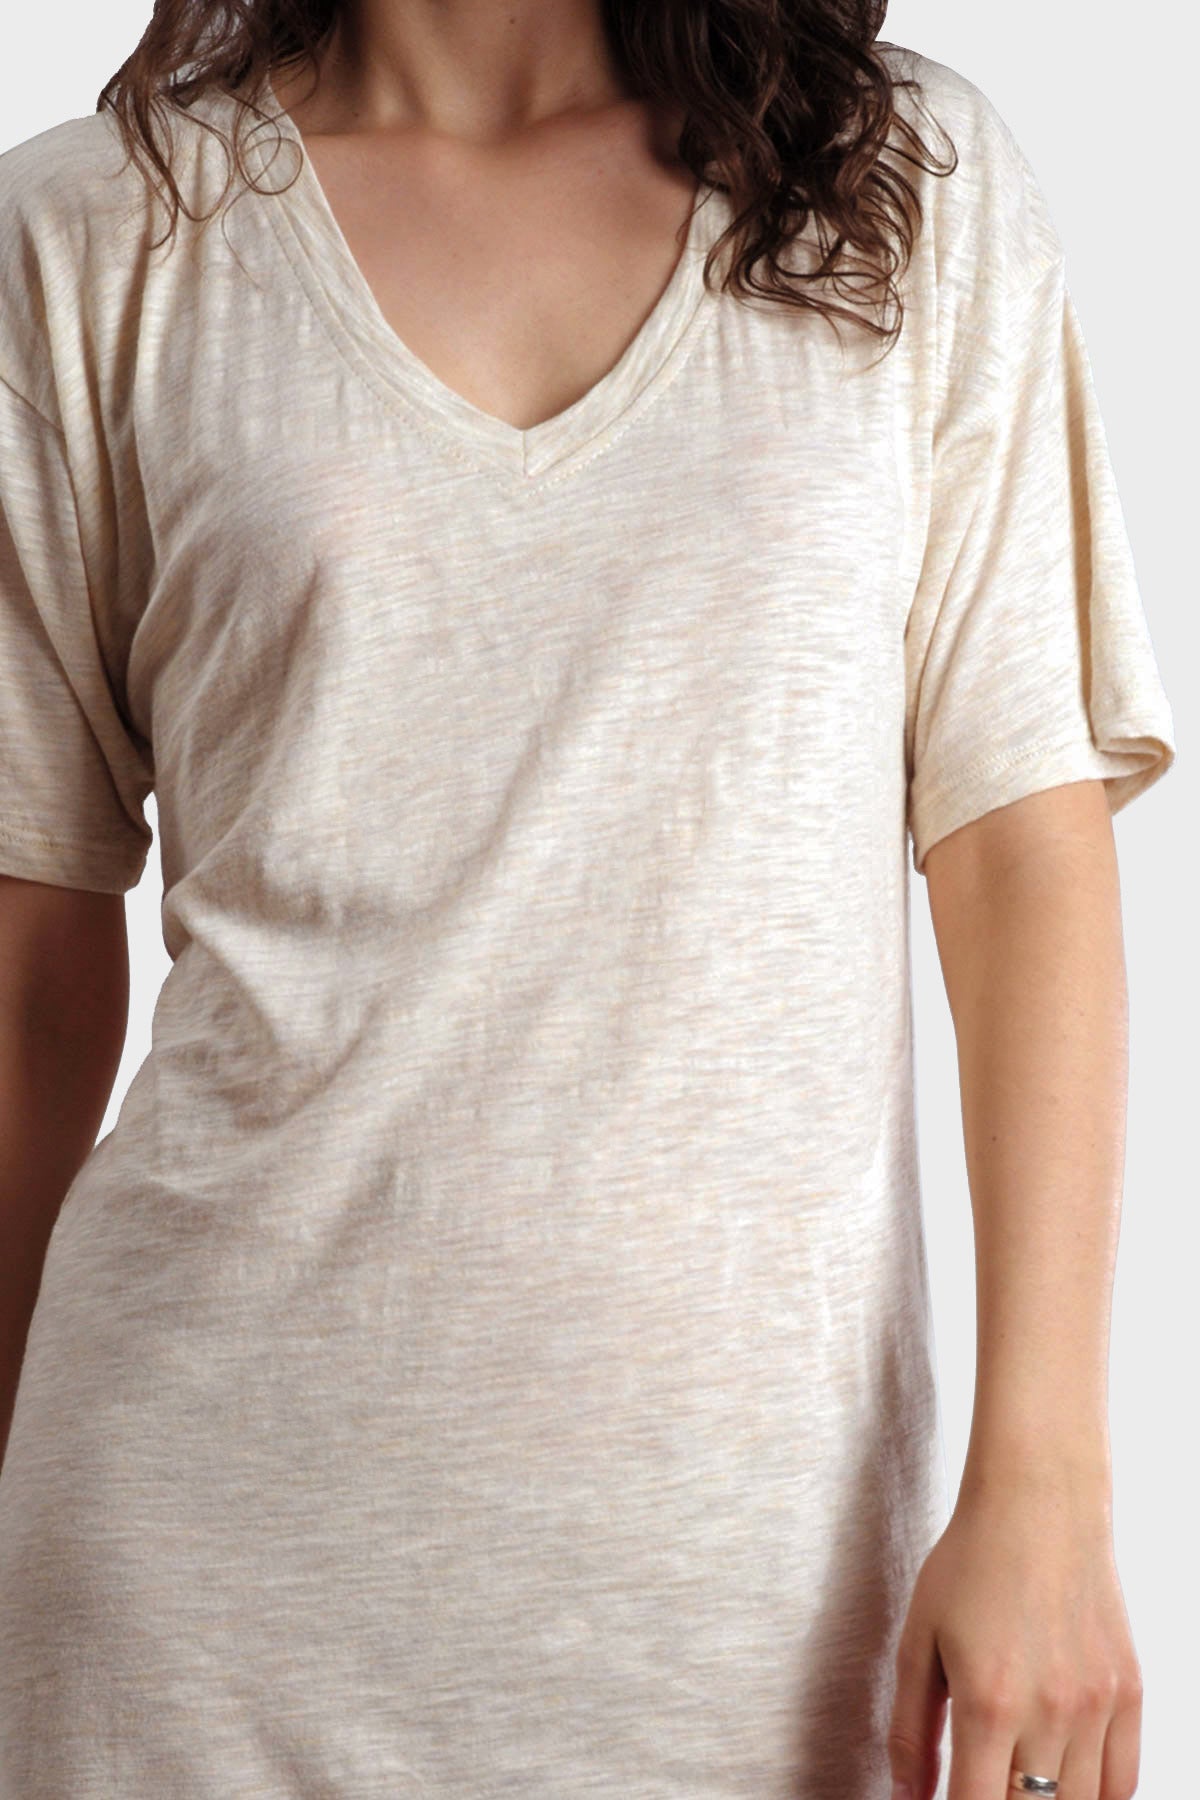 Mika T Shirt Dress 337 Brand